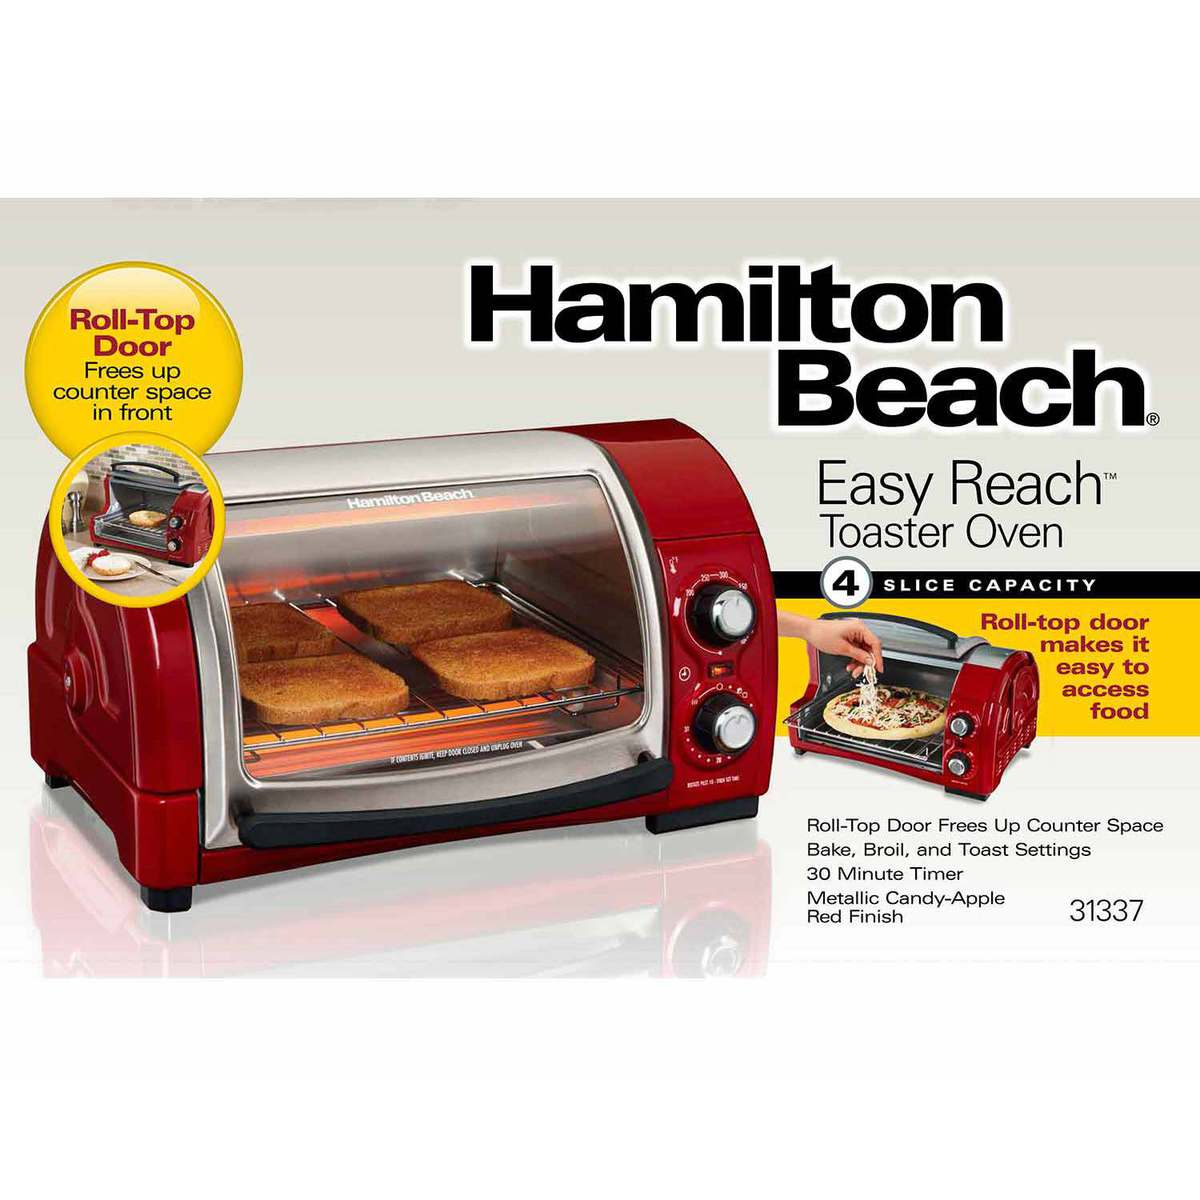 Easy Reach 4-Slice Toaster Oven - 31337 - HamiltonBeach.com